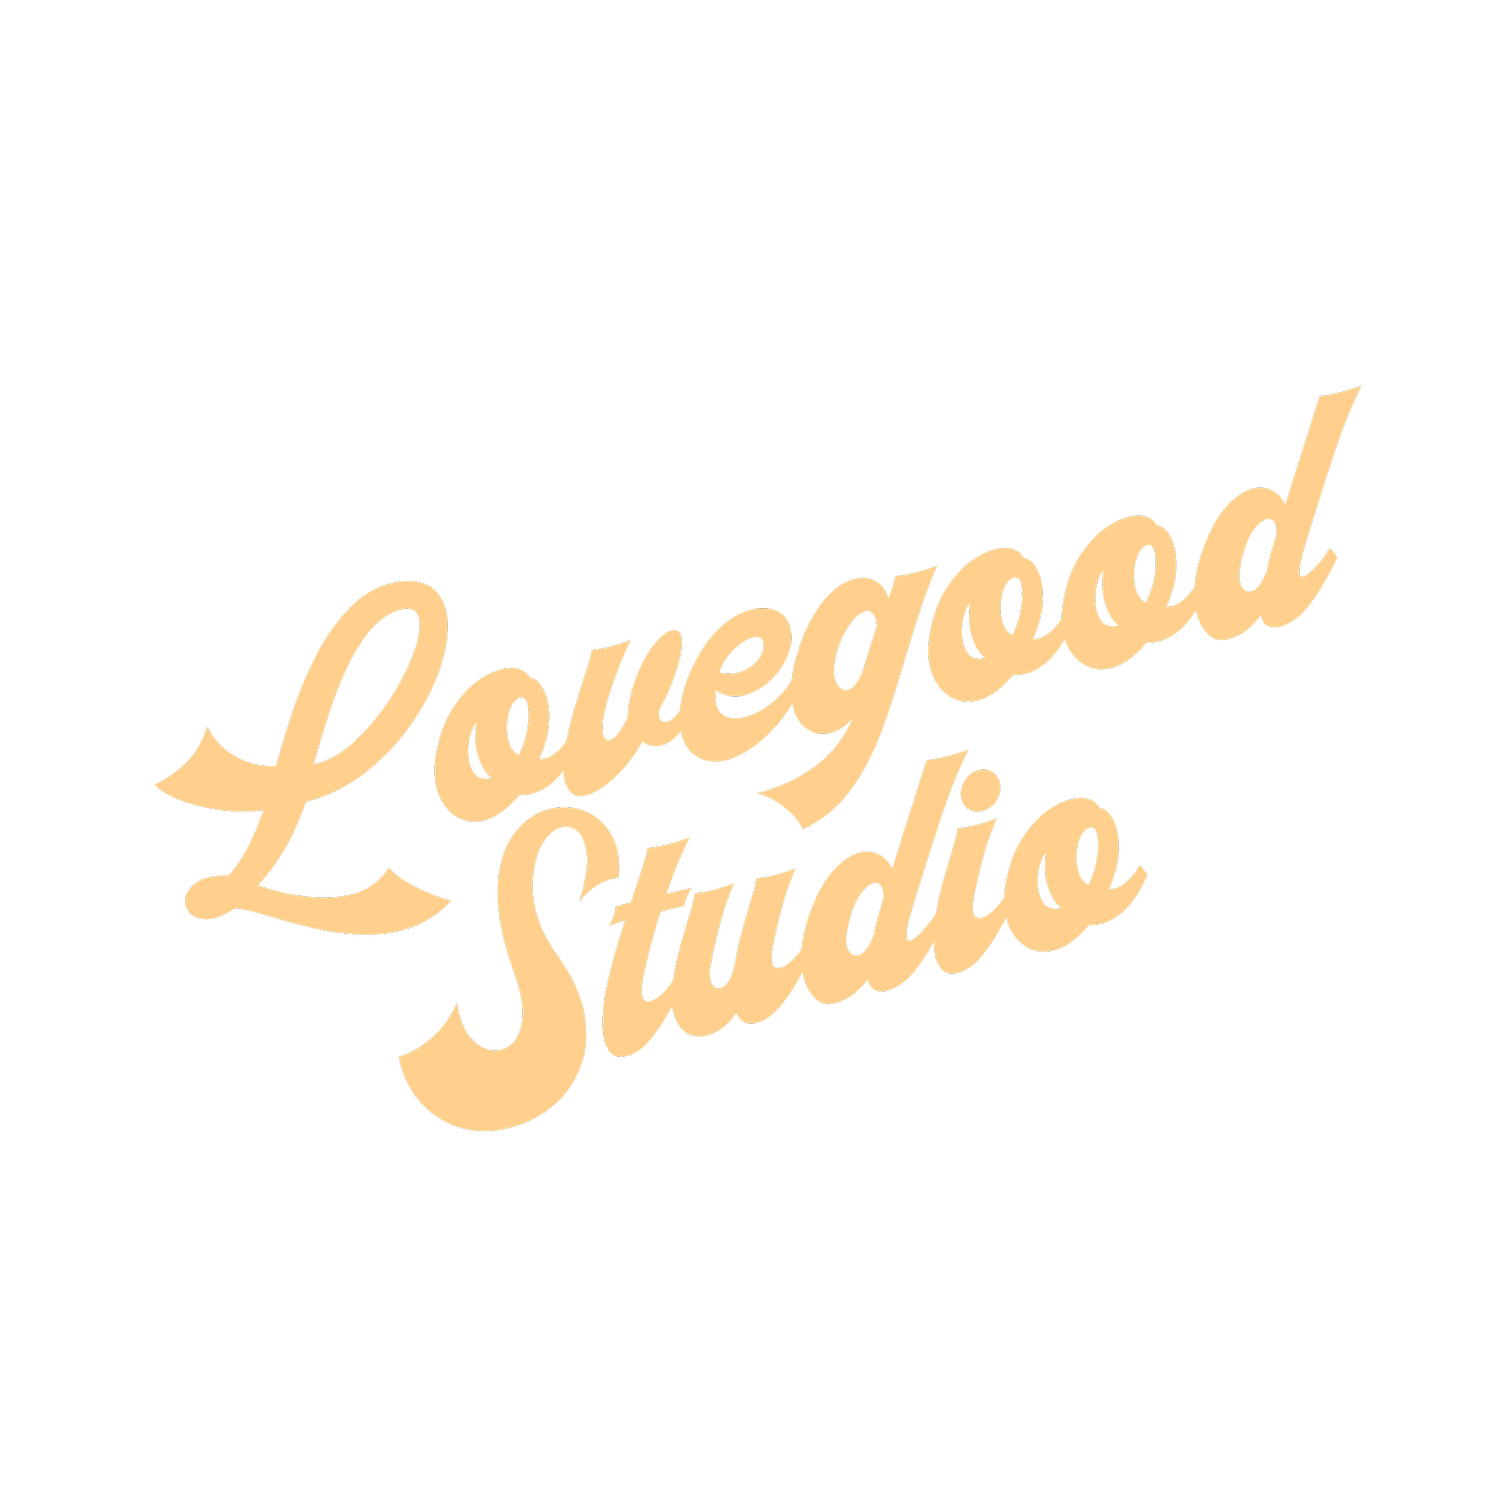 Lovegood Studio